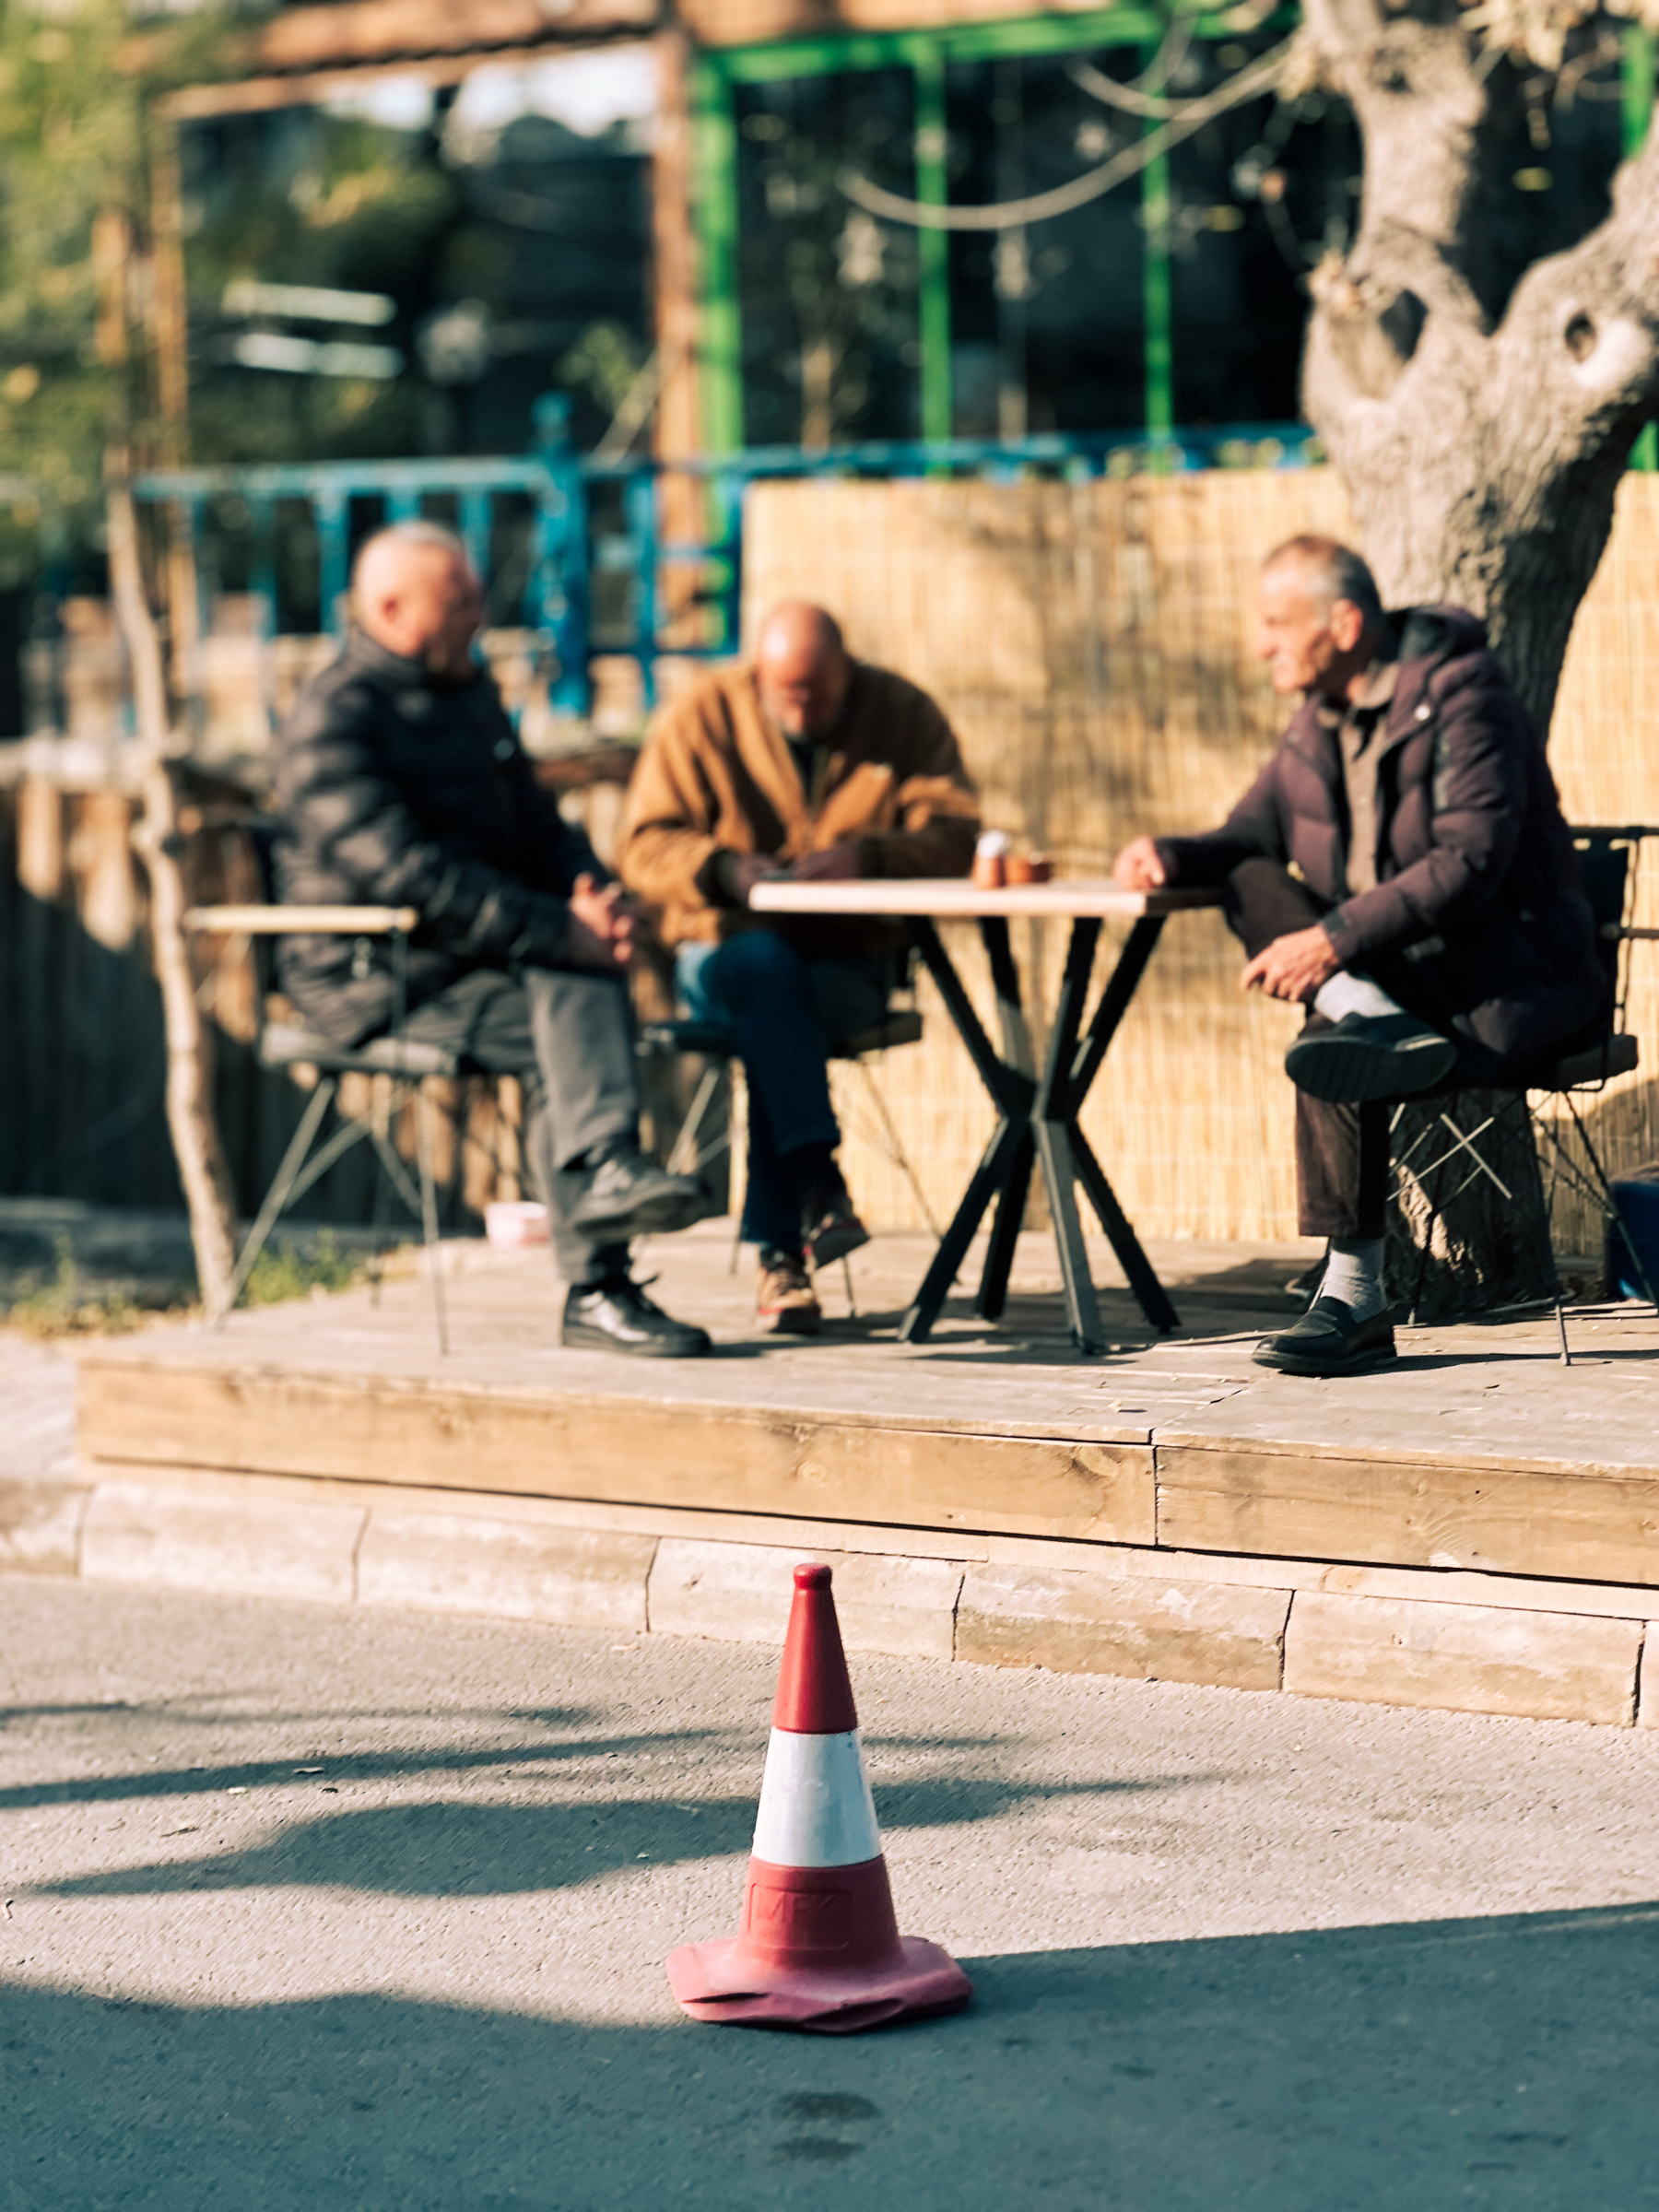 Old men sitting outside.